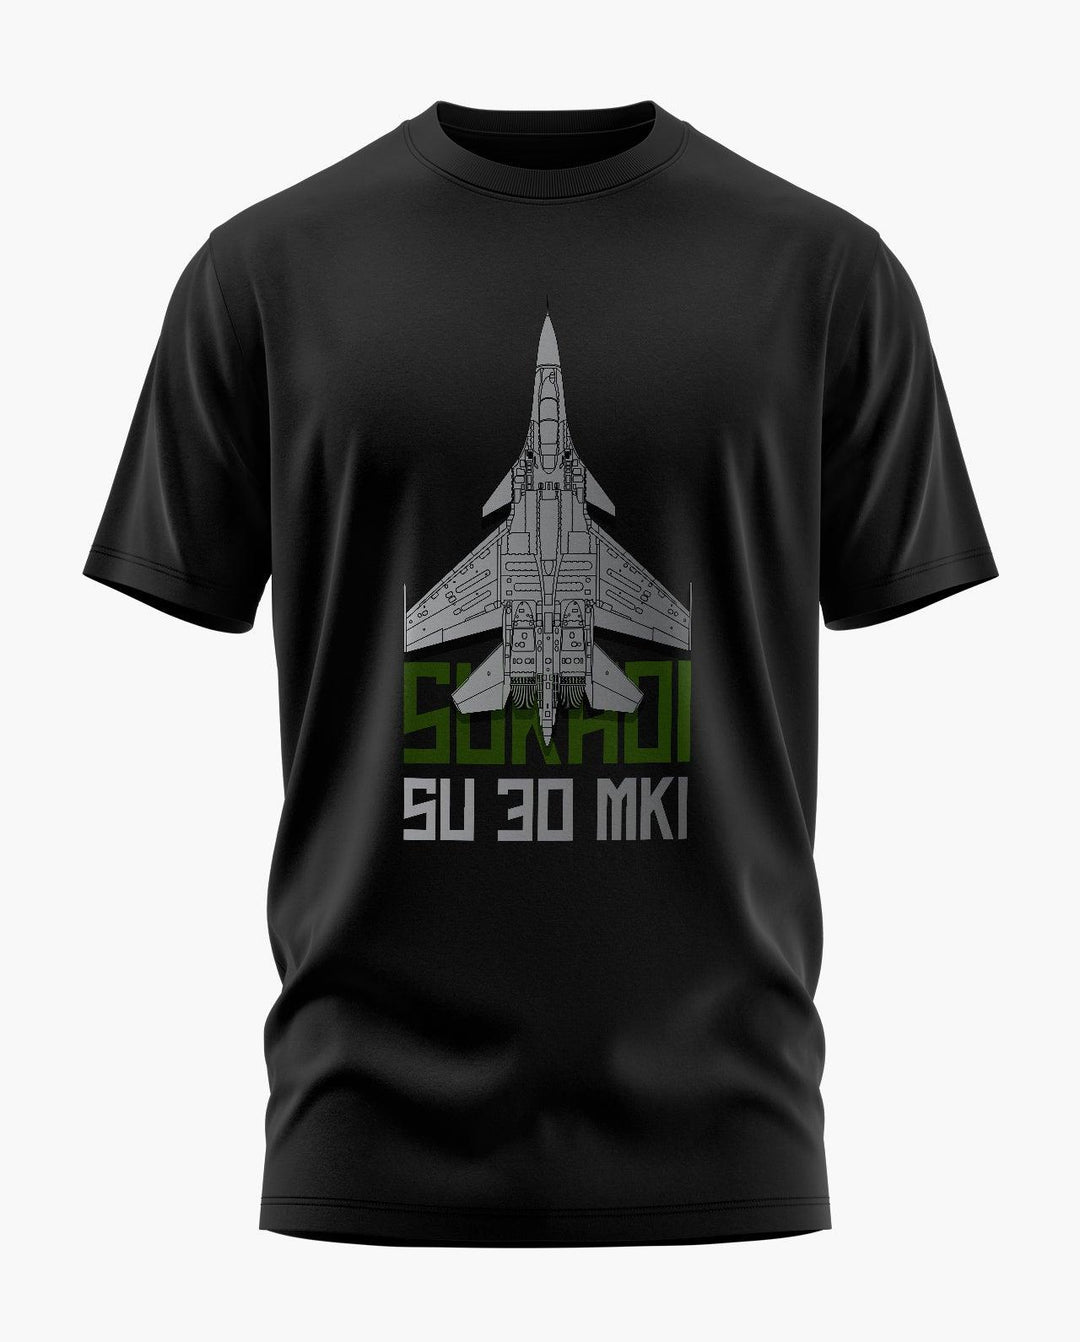 Sukhoi Su-30 MKI T-Shirt - Aero Armour